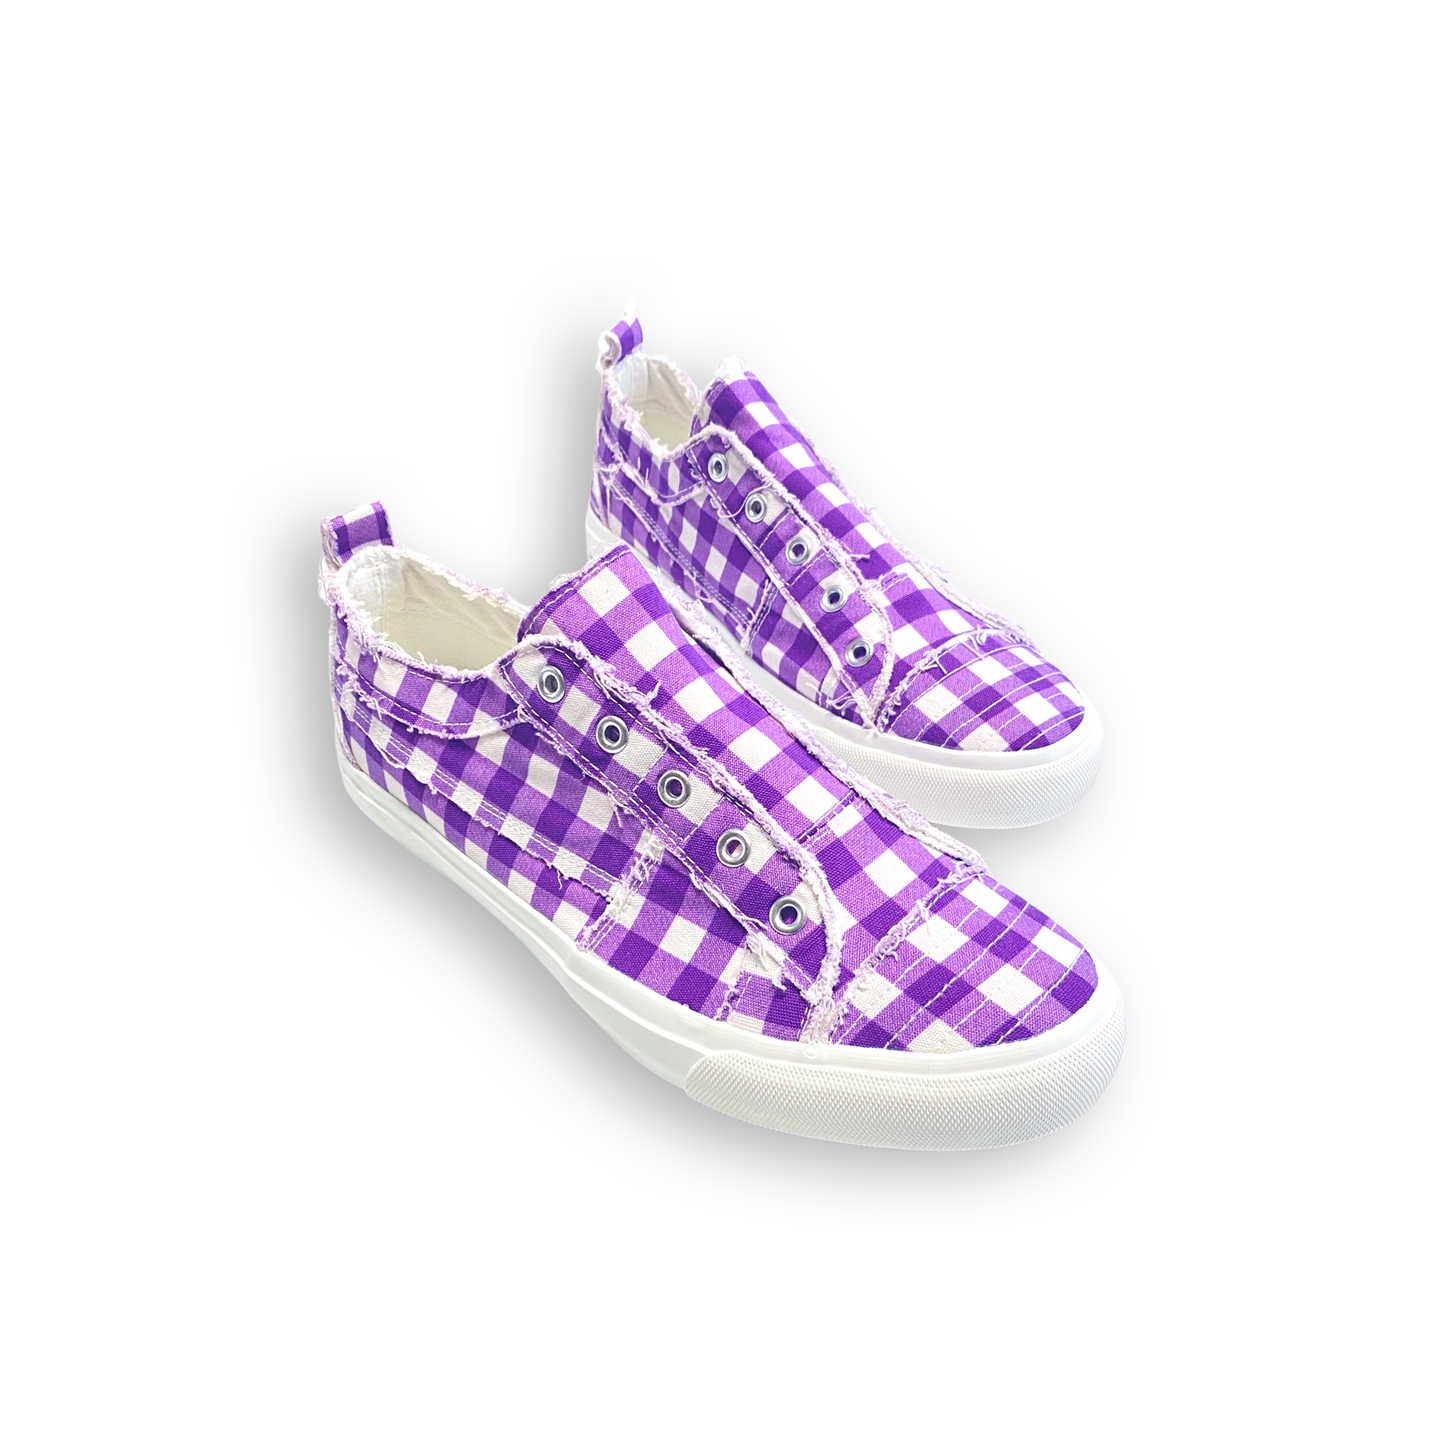 Purple Gingham Babalu Shoes